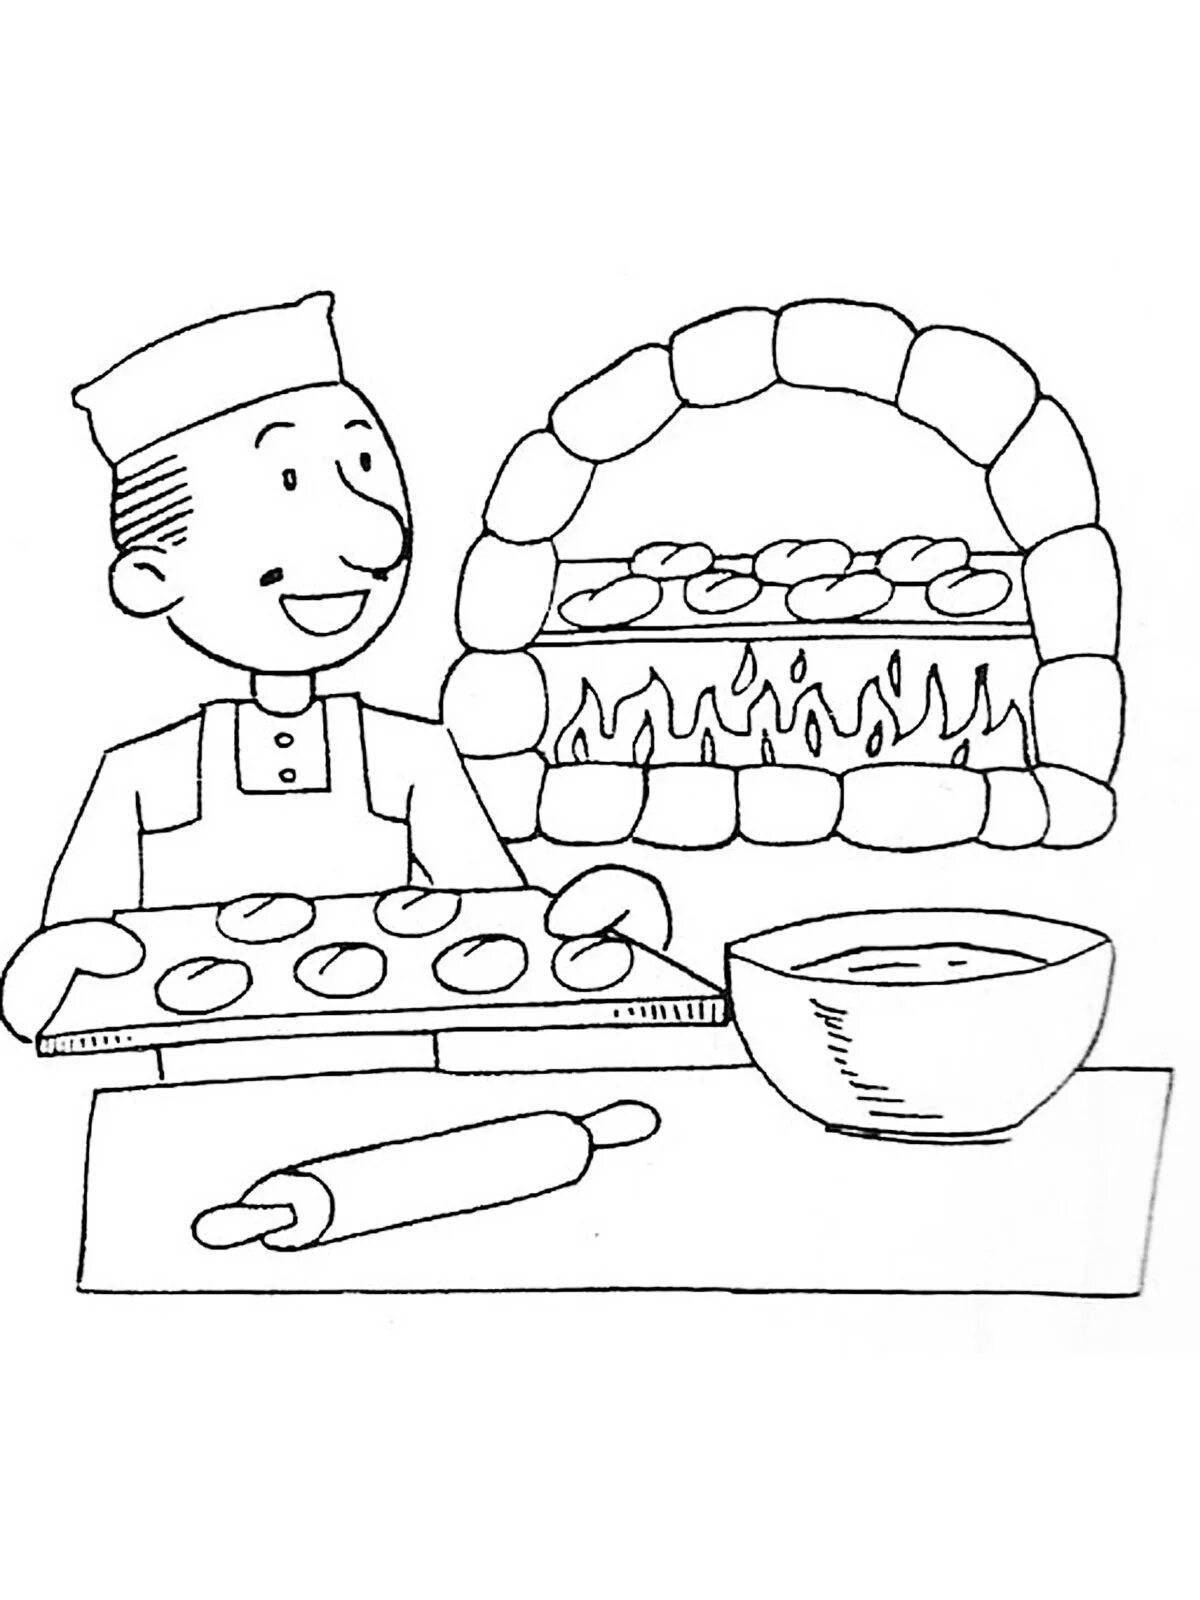 Cute preschool bakery coloring book